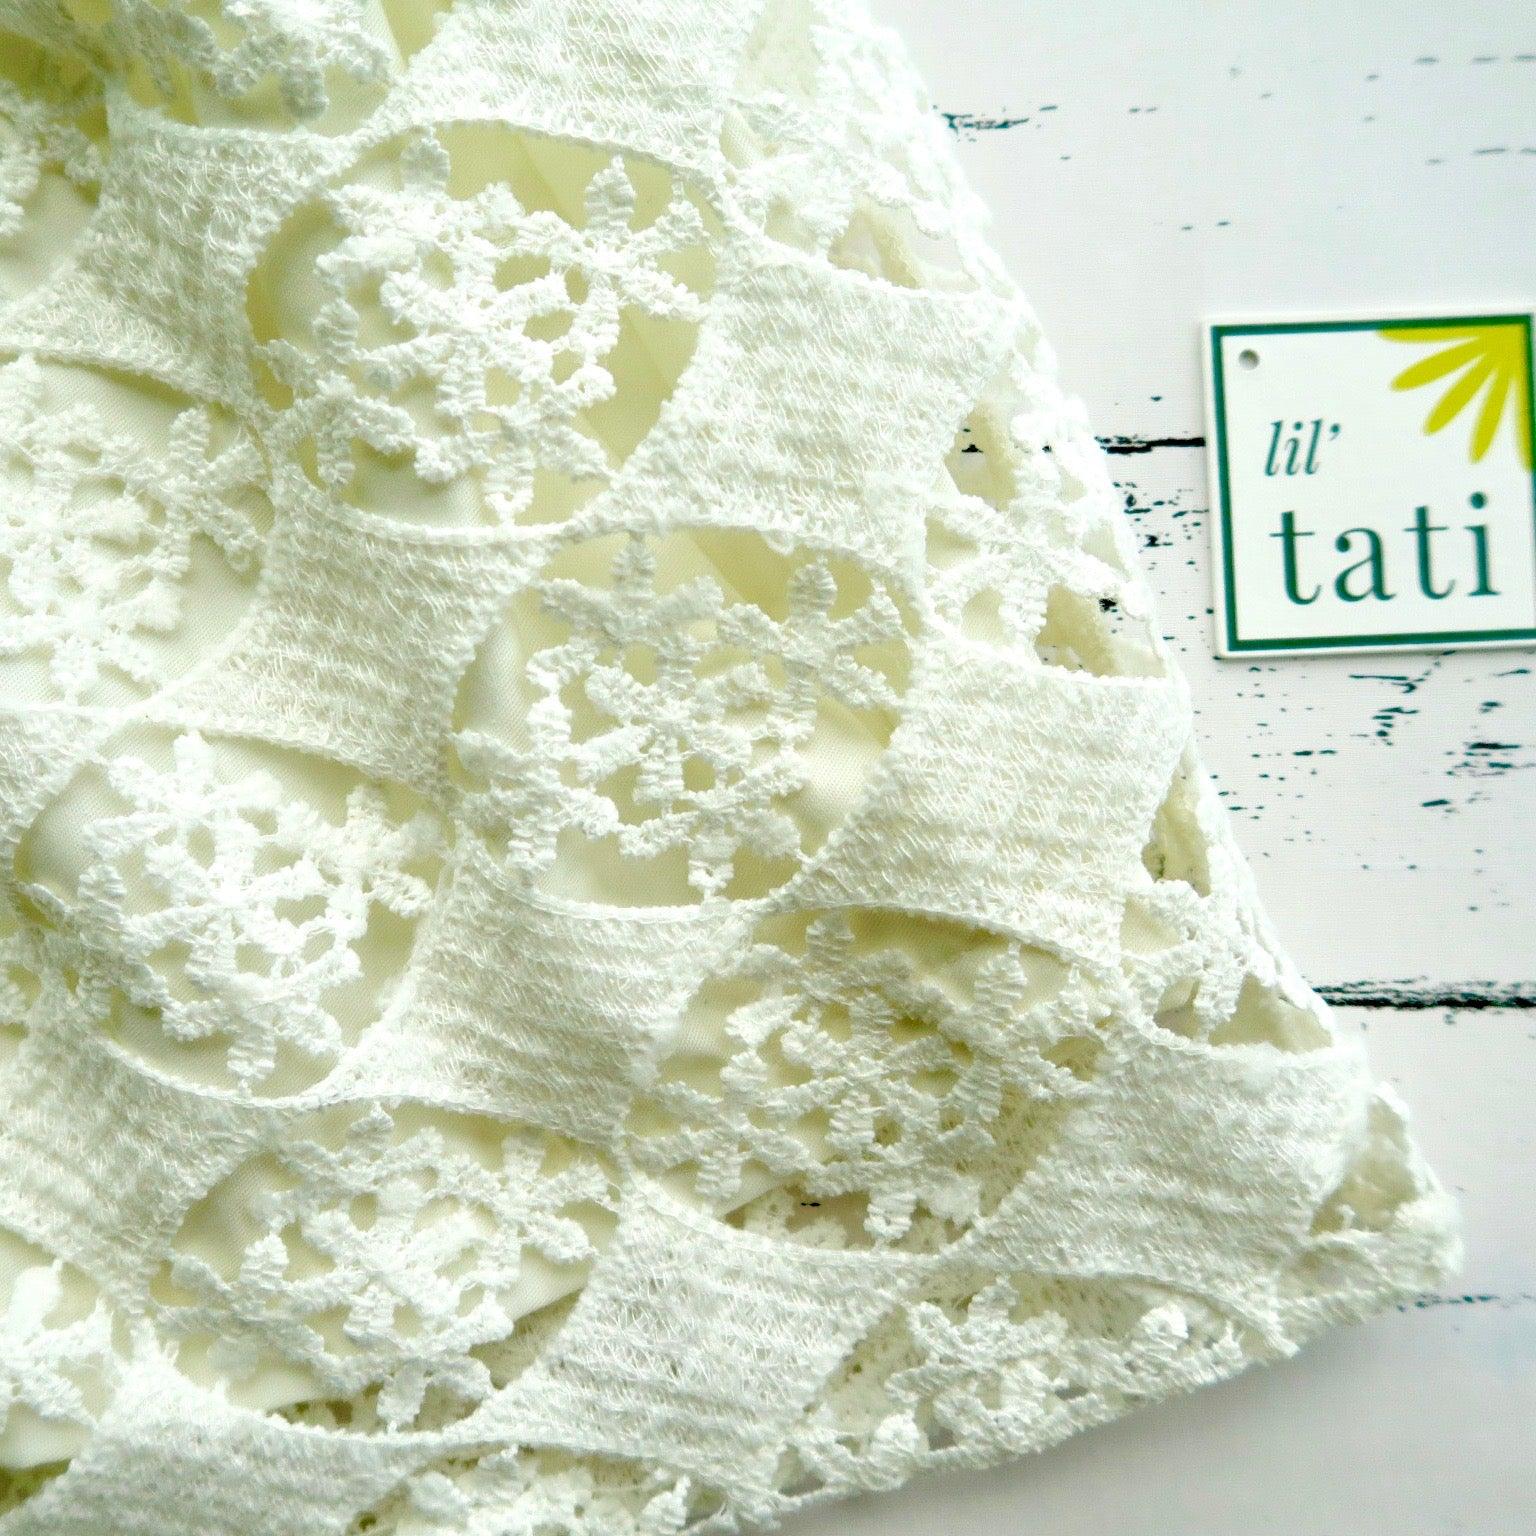 Lotus Dress in Oblong Floral Cotton Lace - Lil' Tati